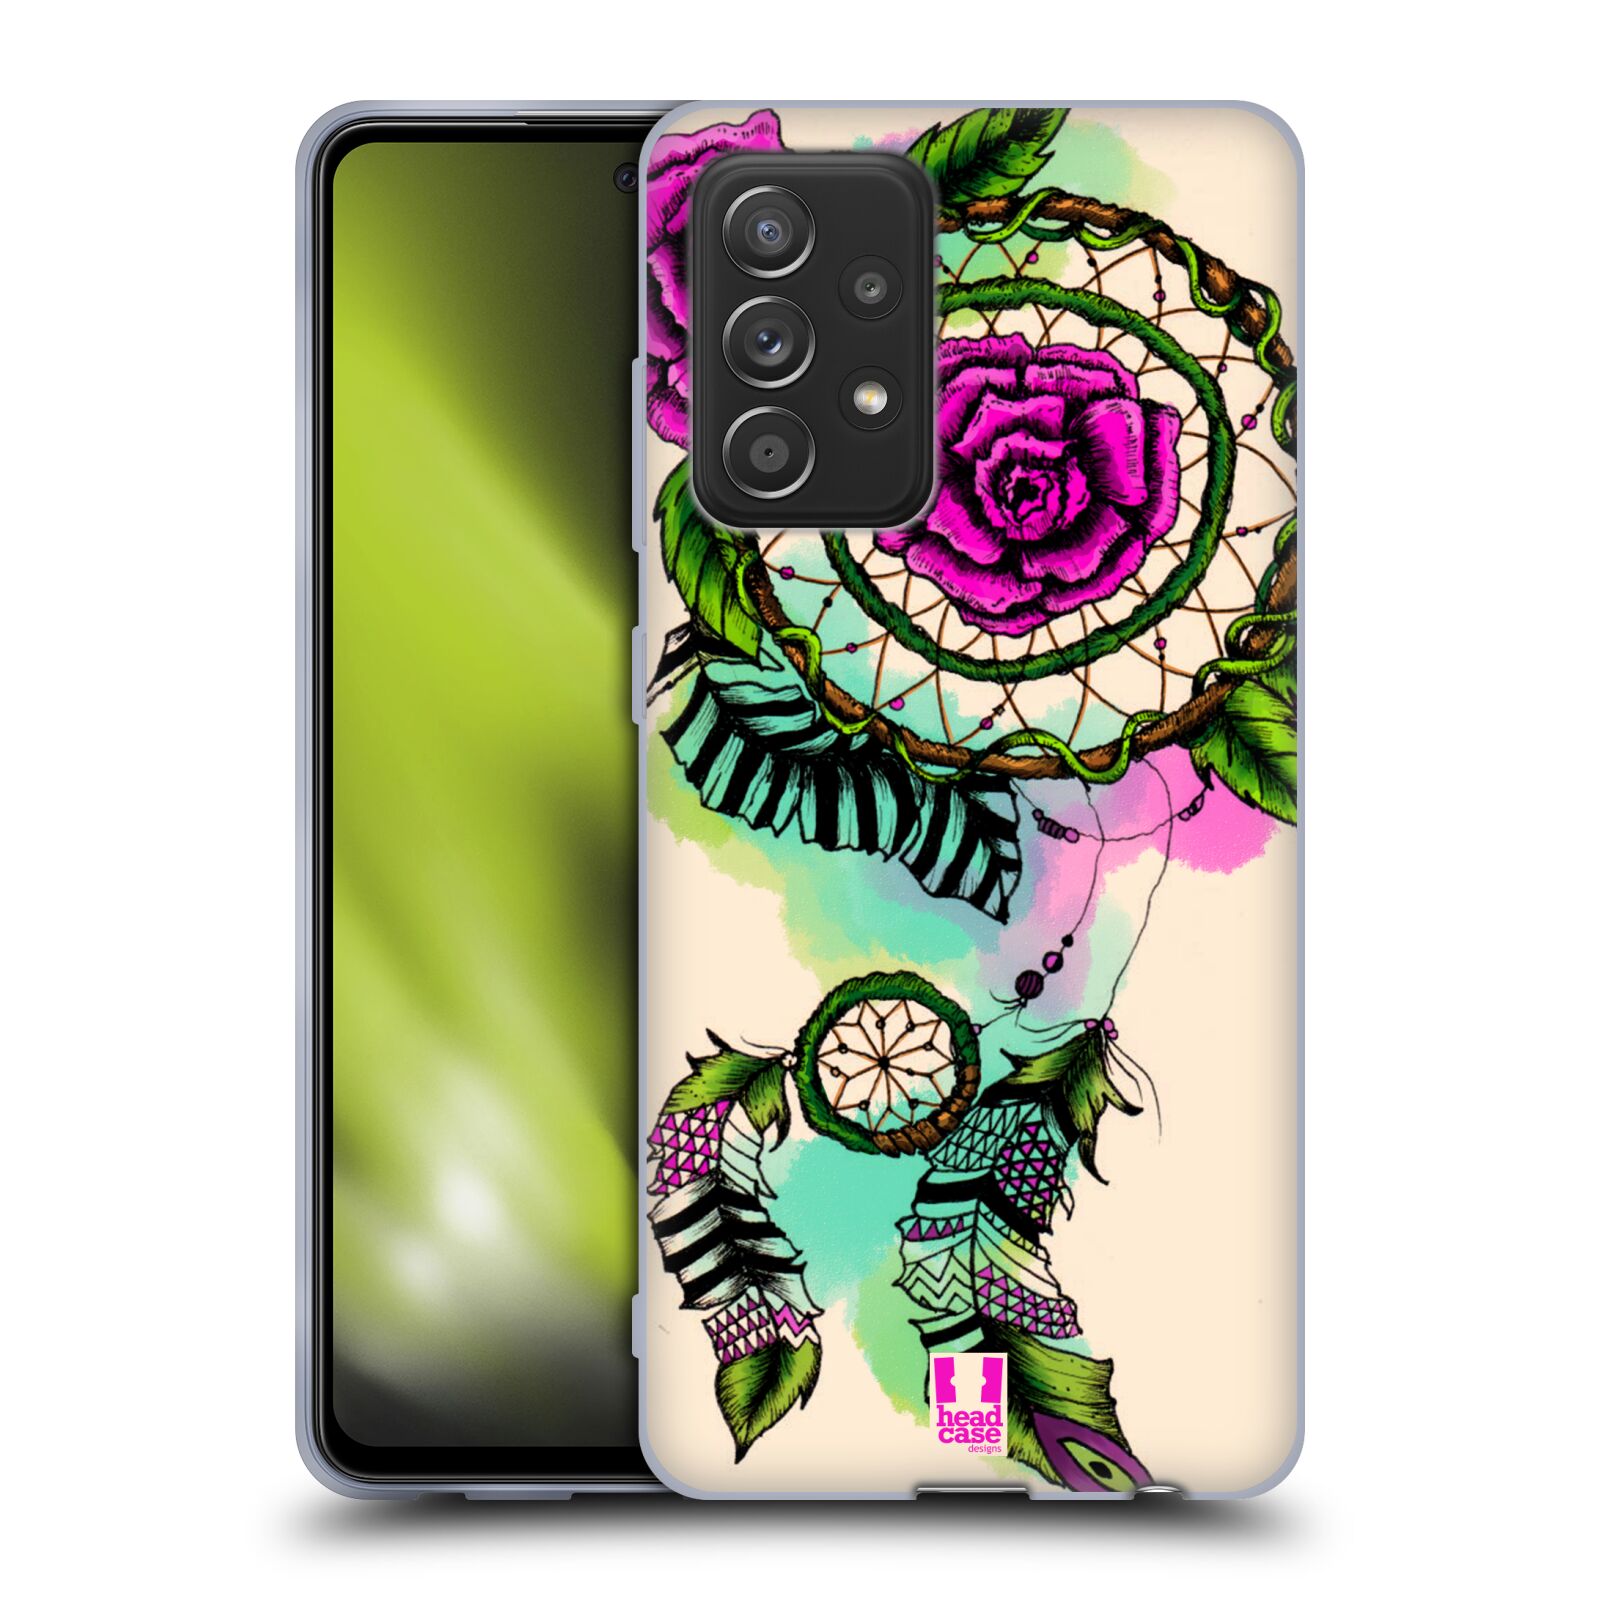 Plastový obal HEAD CASE na mobil Samsung Galaxy A52 / A52 5G / A52s 5G vzor Květy lapač snů růže